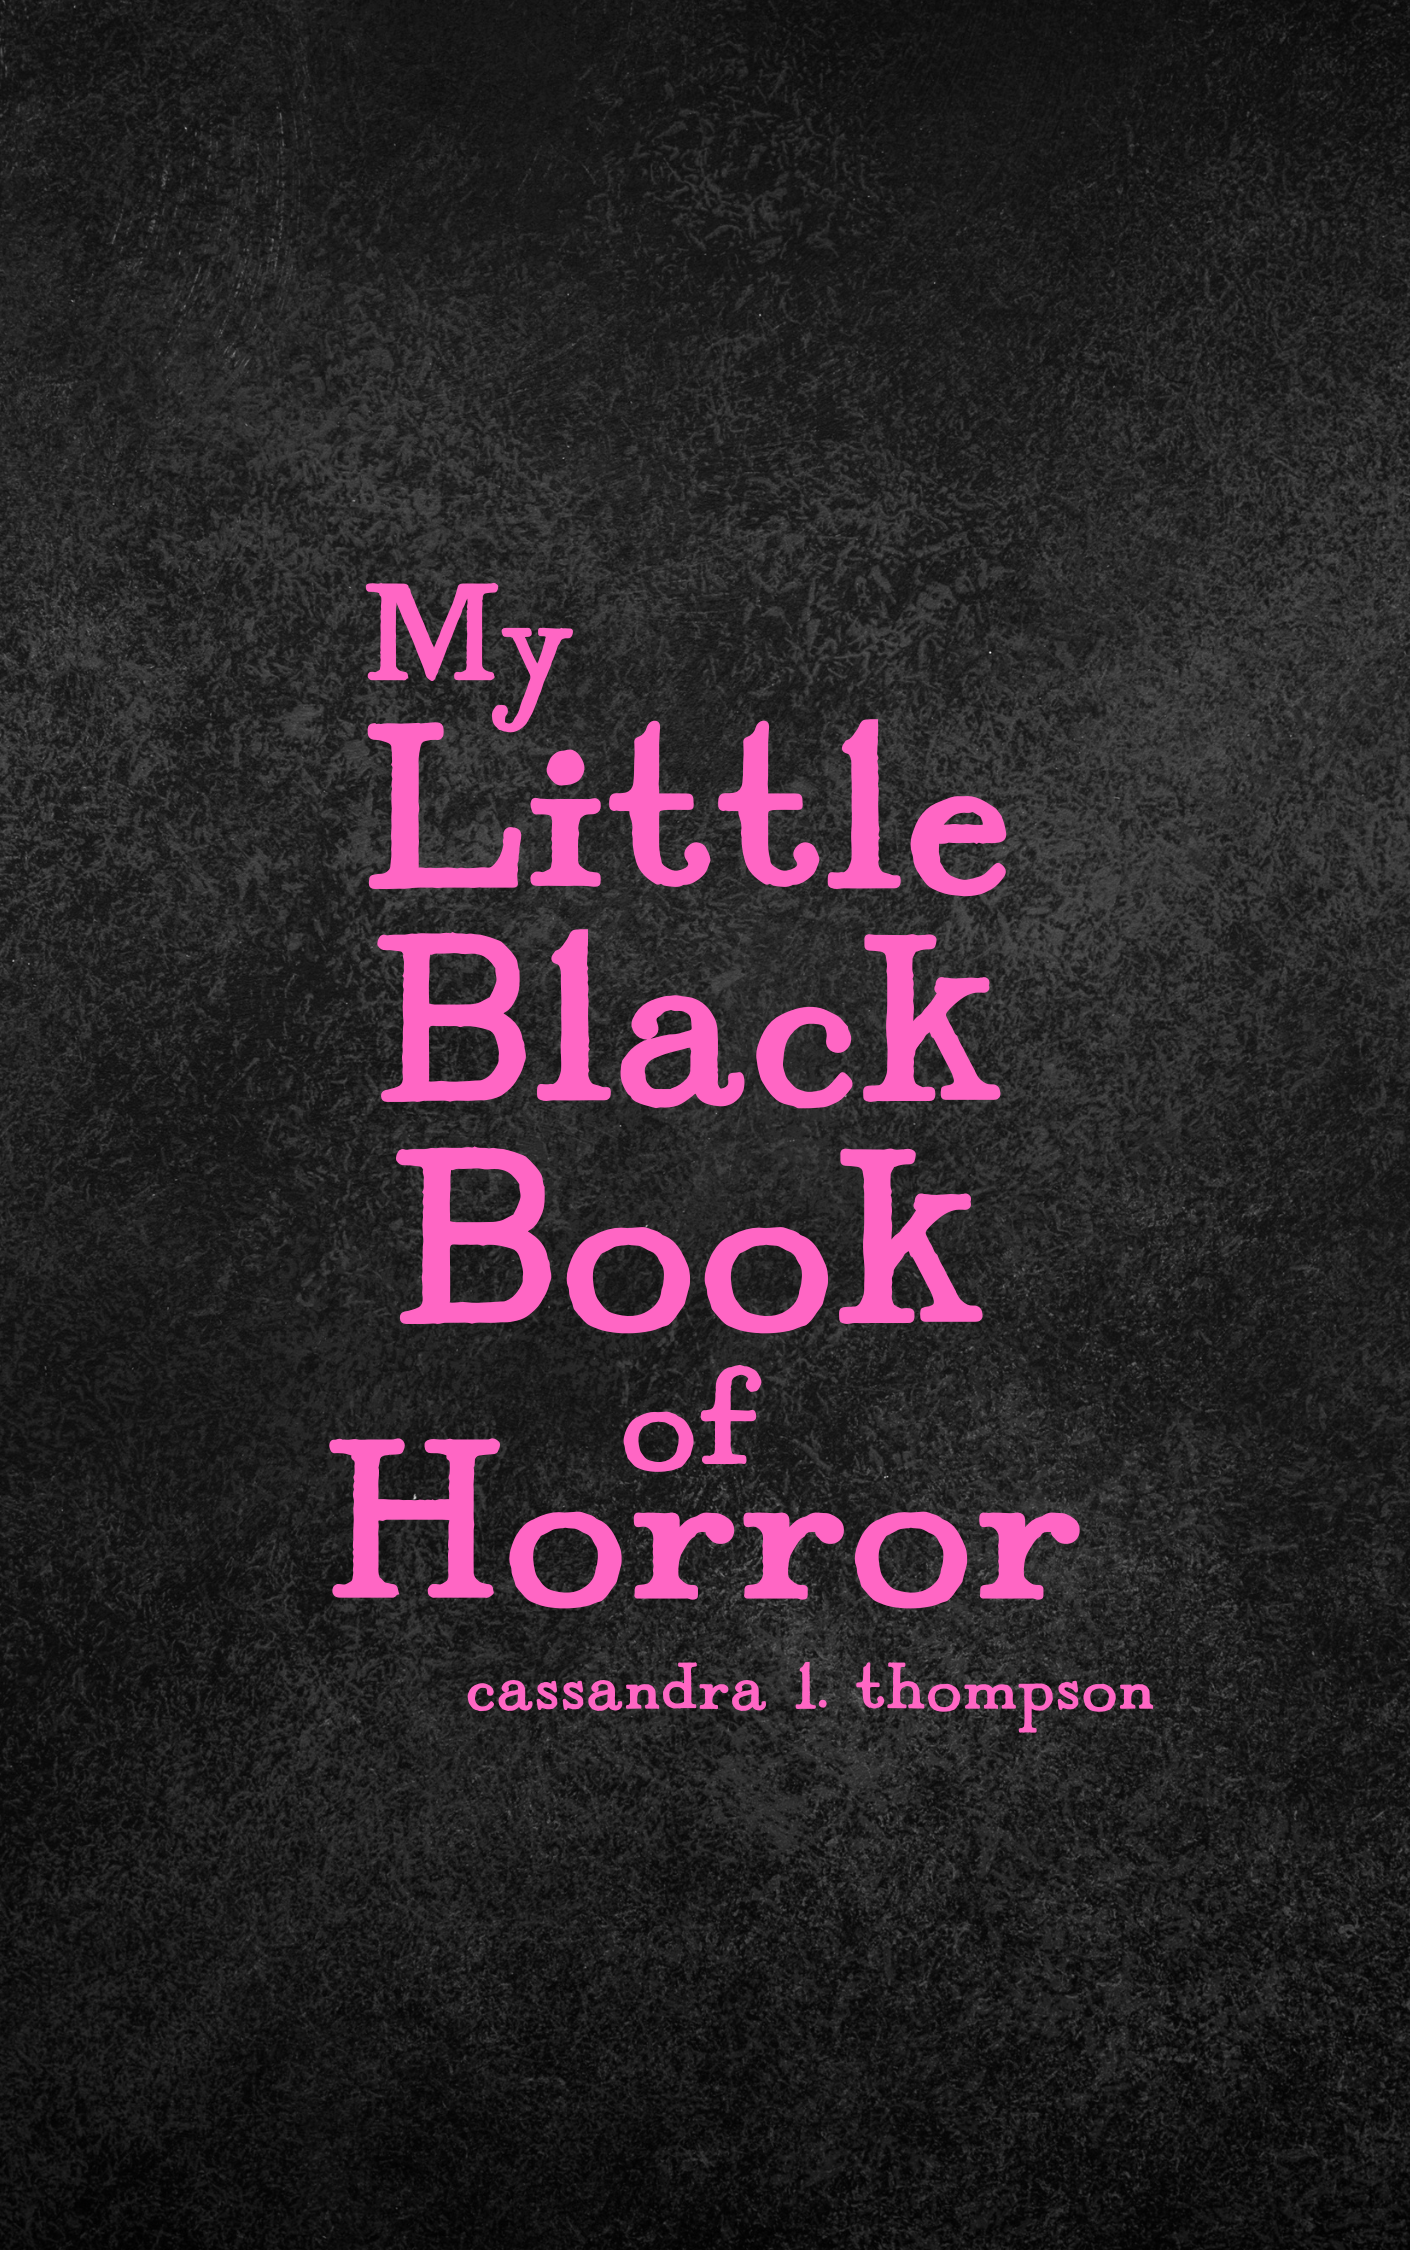 My Little Black Book of Horror (CC #2)